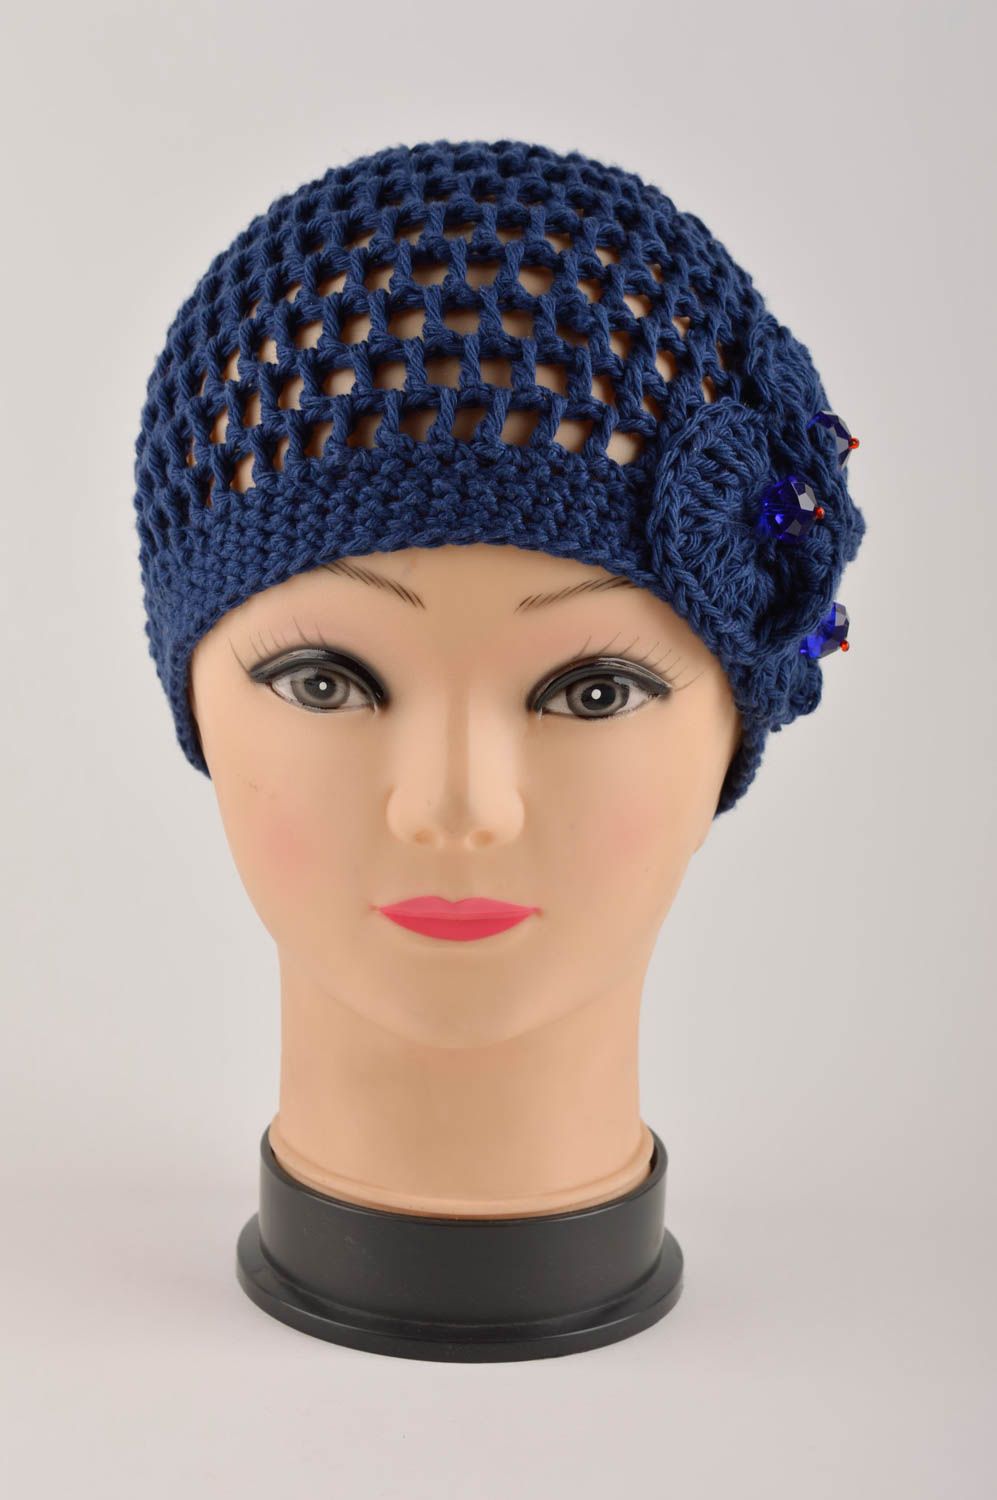 Handmade crochet hat ladies hats womens hats designer accessories gifts for her photo 3